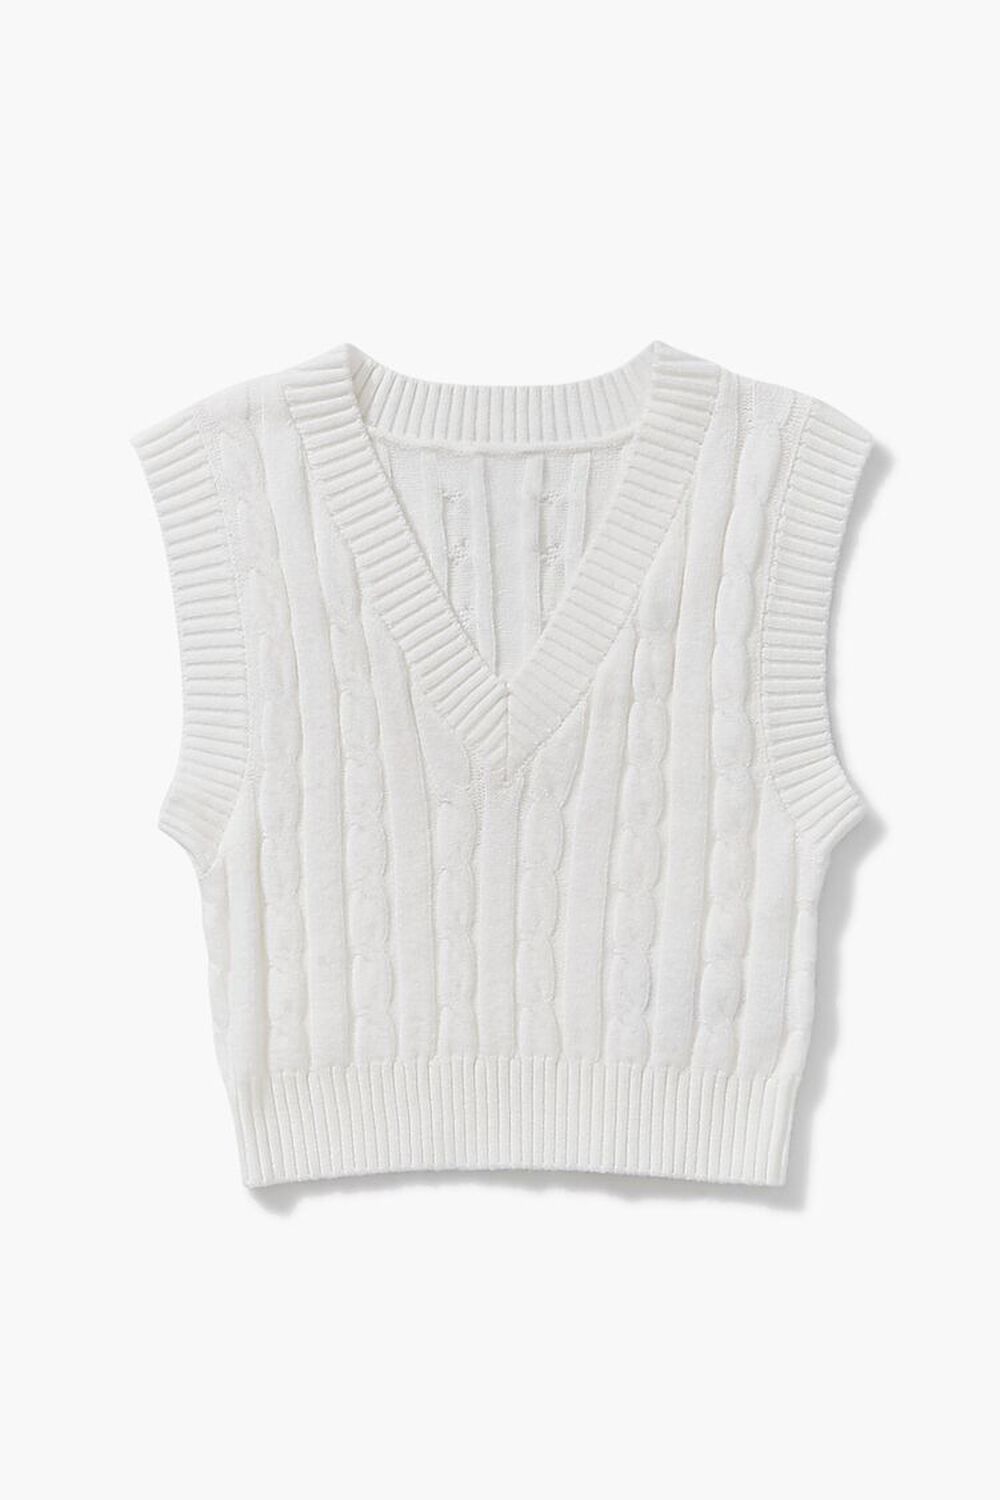 WHITE Girls Sleeveless Cable-Knit Sweater (Kids), image 1